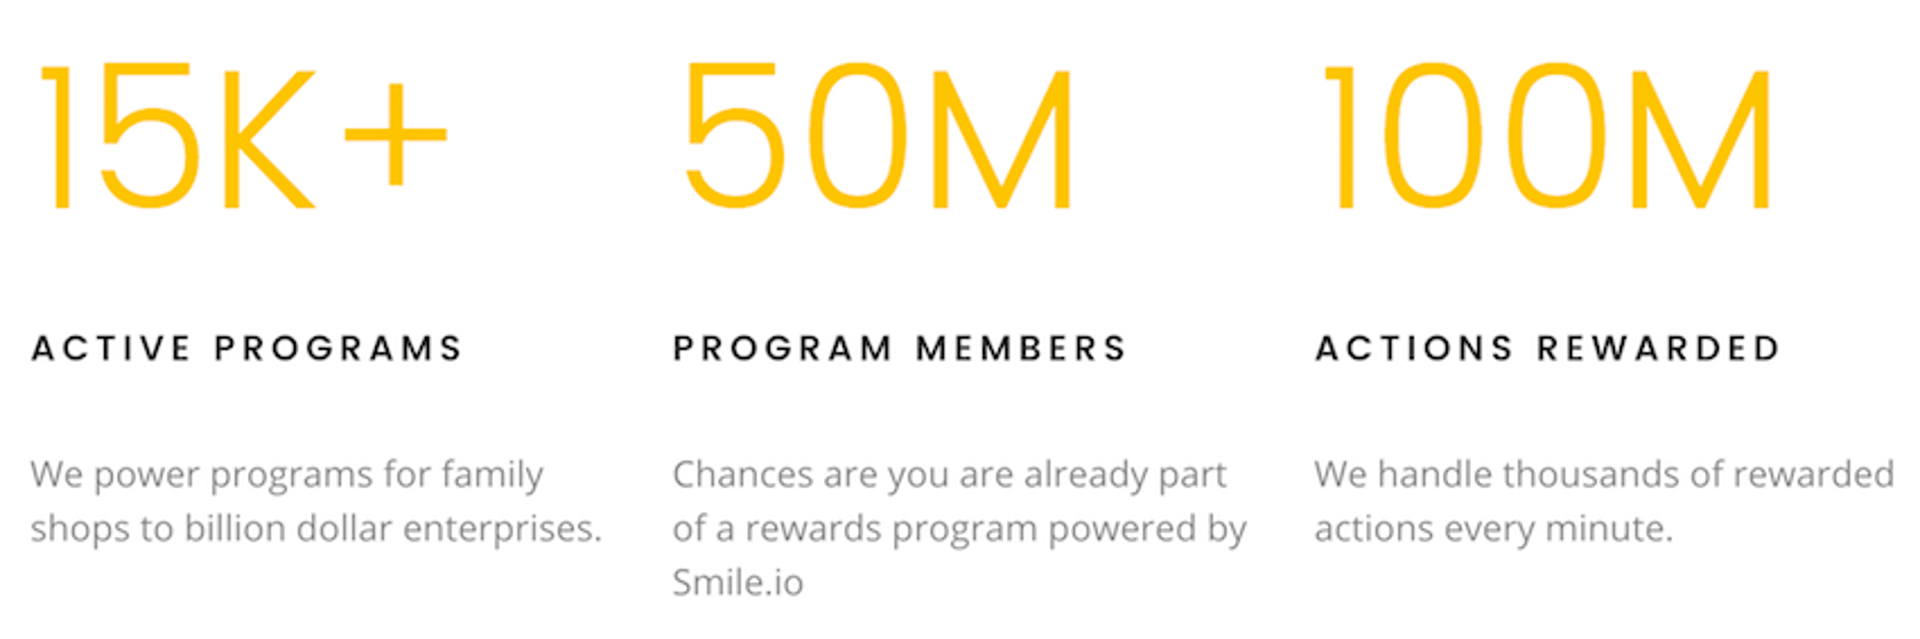 Smile Reward Program Power